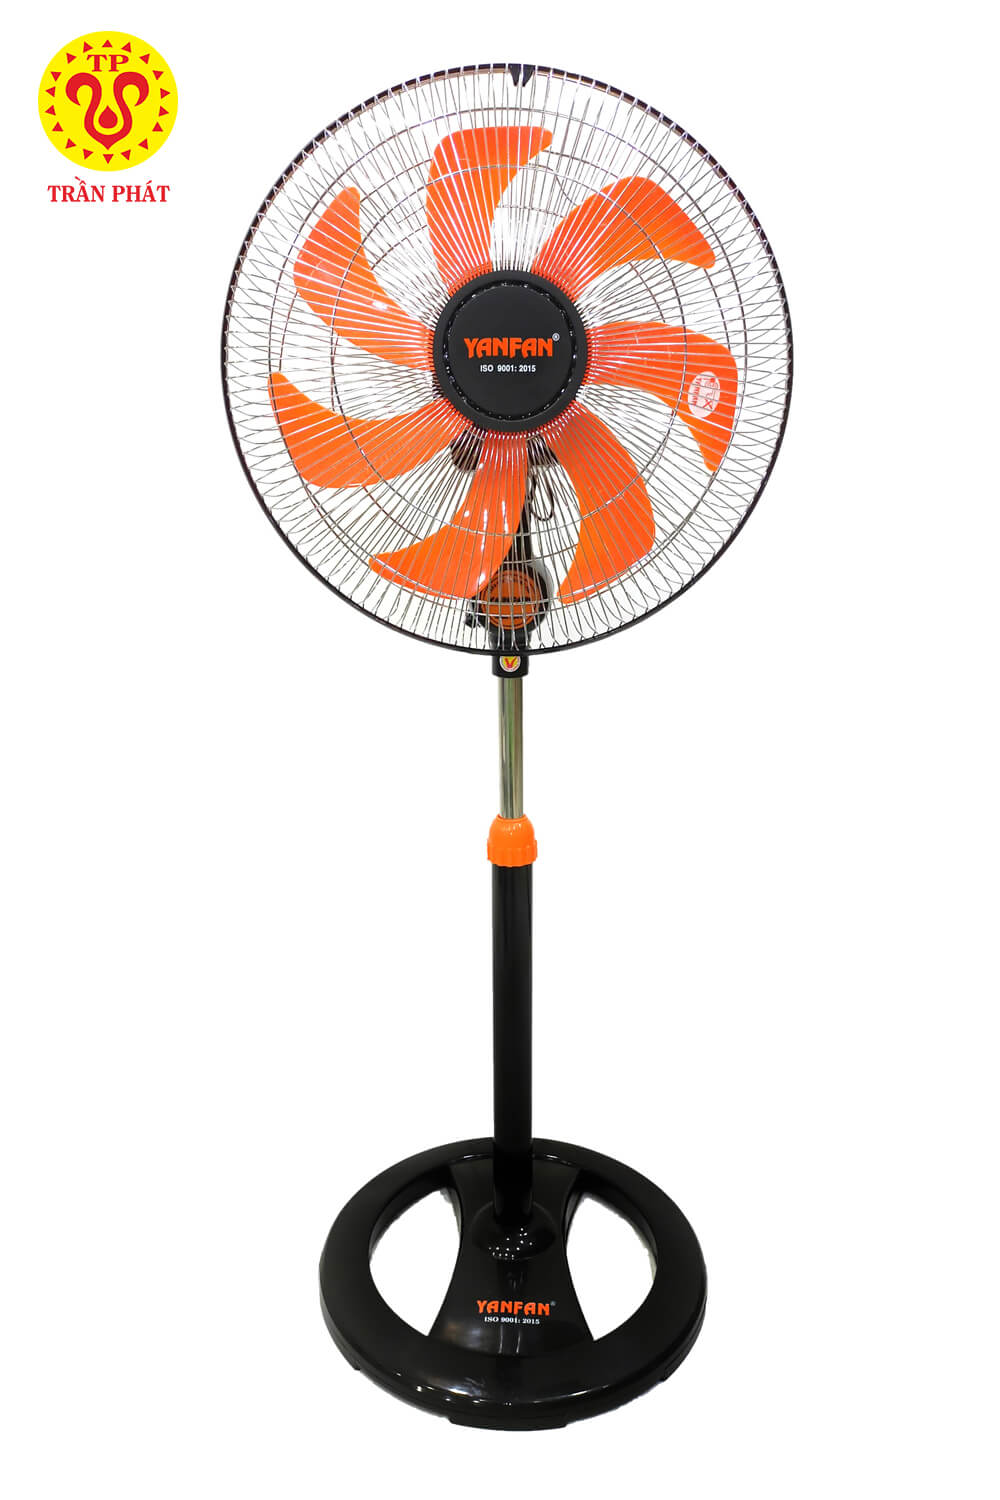 Modern, elegant design of a standing fan